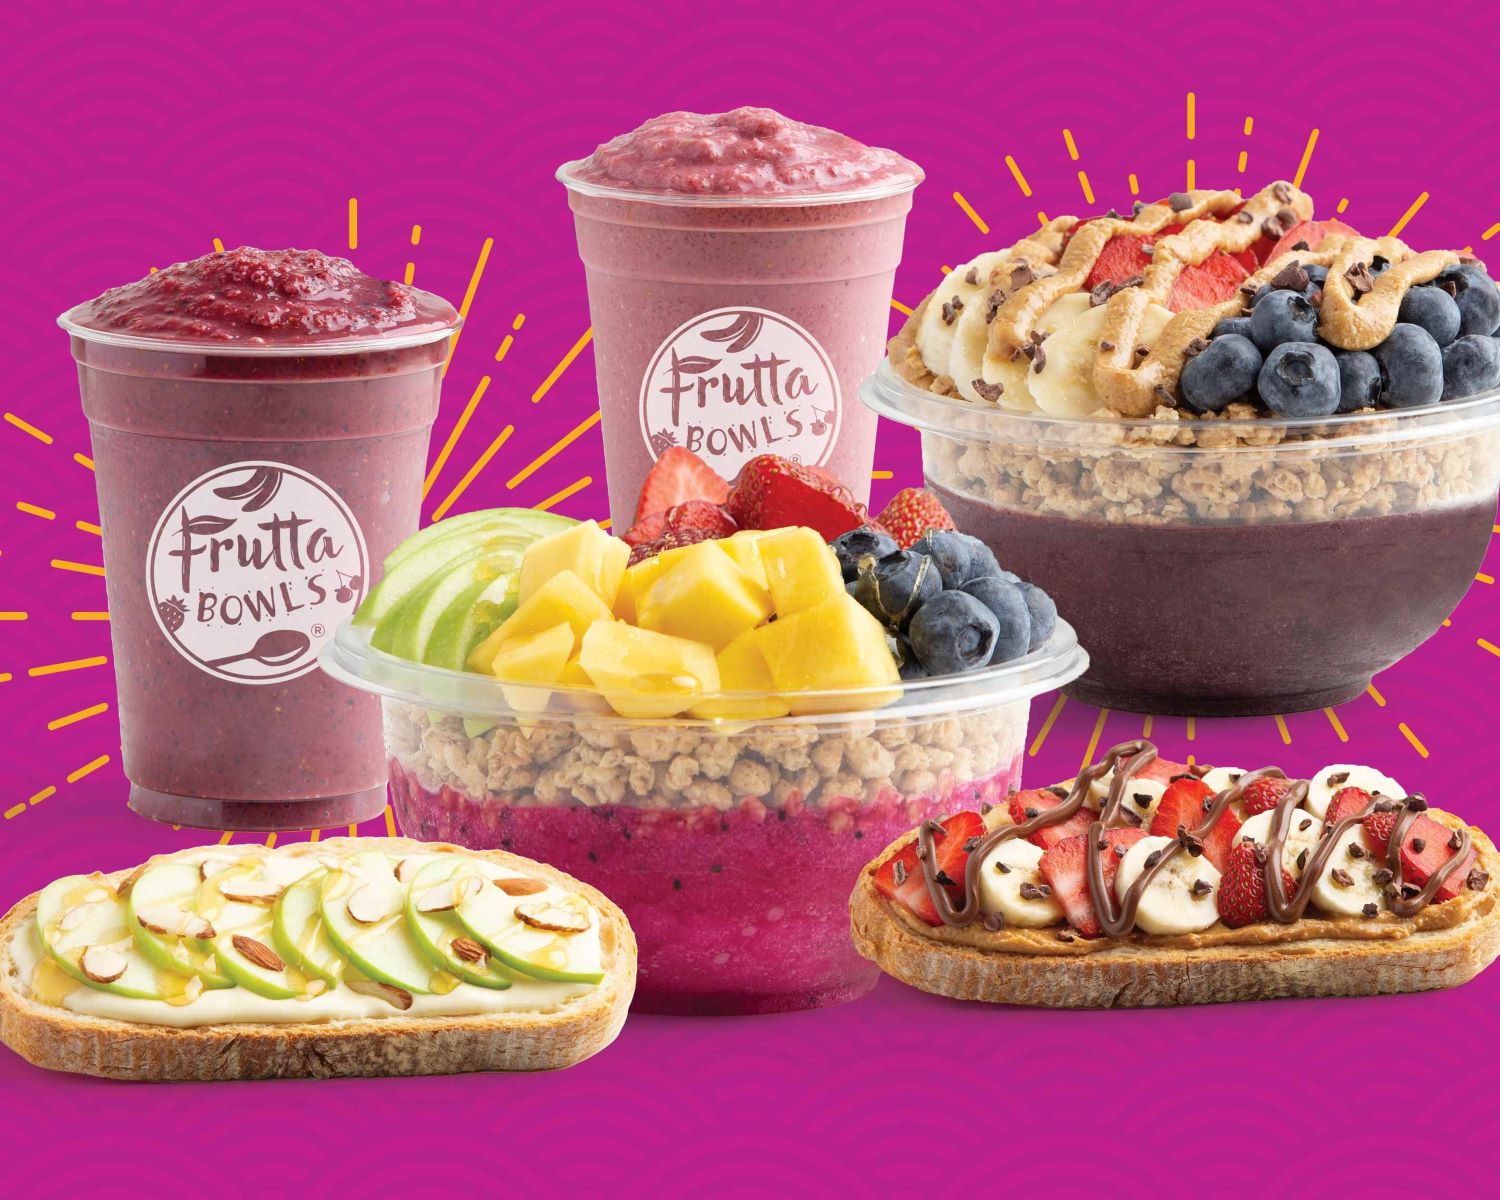 15-frutta-bowls-nutrition-facts